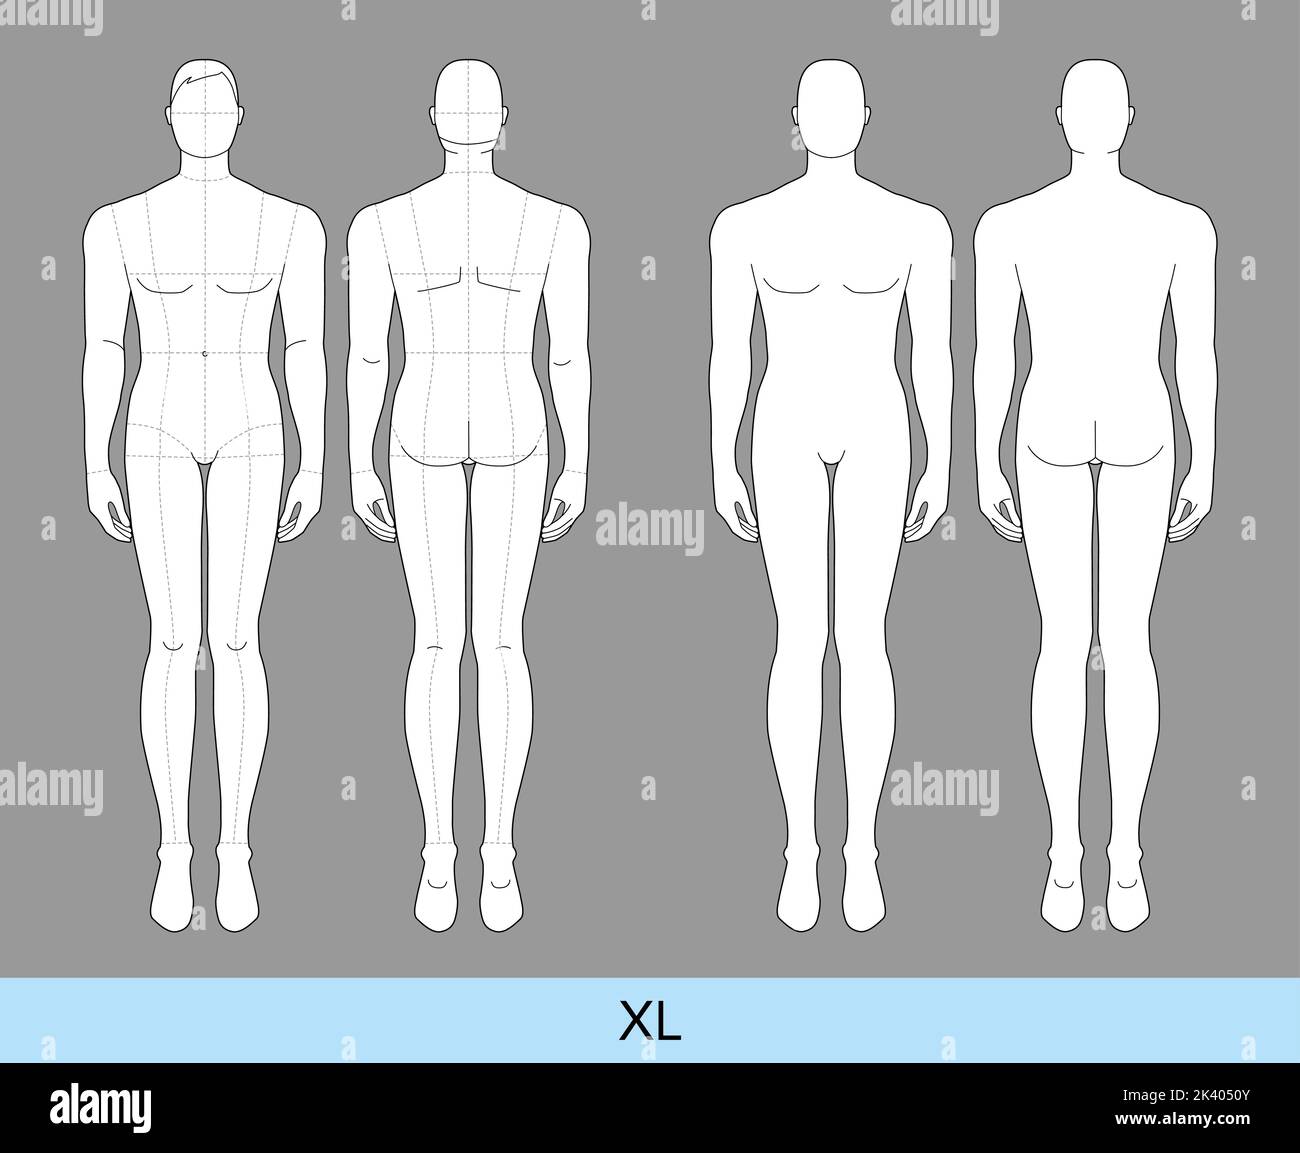 Curvy body type Stock Vector Images - Alamy